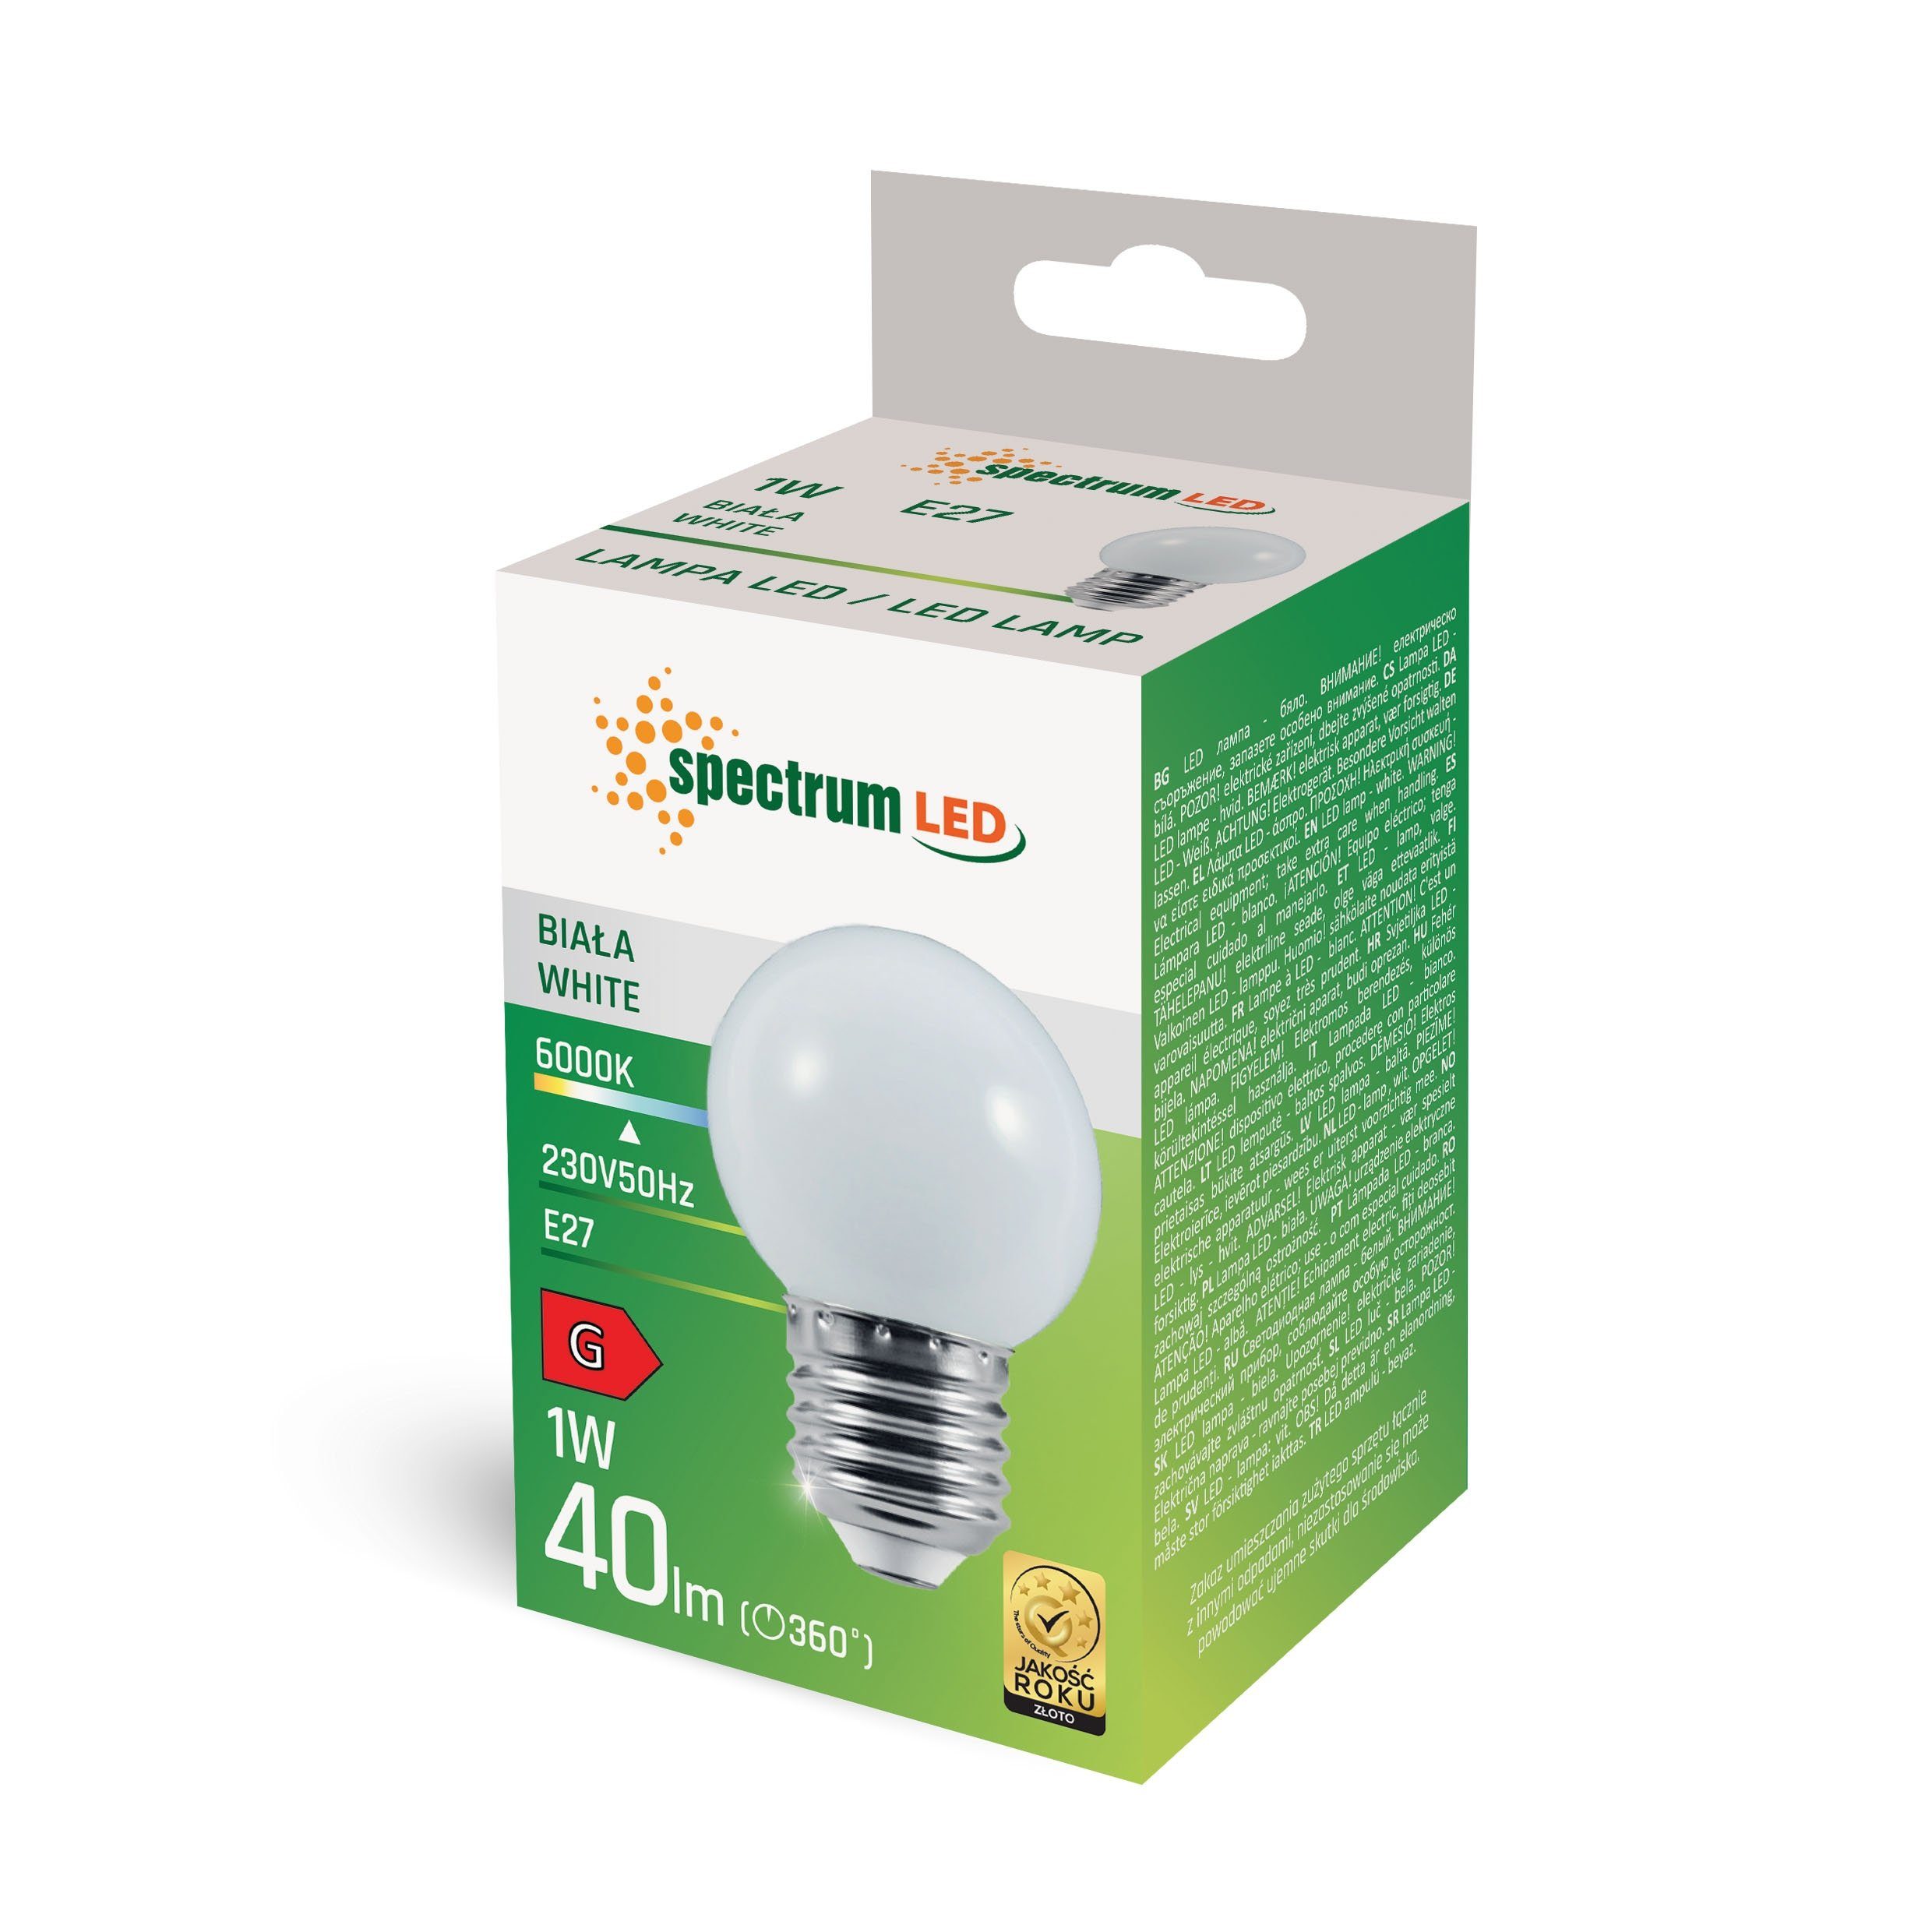 E27 LED 40lm Tropfen LED-Leuchtmittel spectrum Lichterkette 1W LED G45 E27, 230V 10W Weiß WEIß, Bunt = 6000K